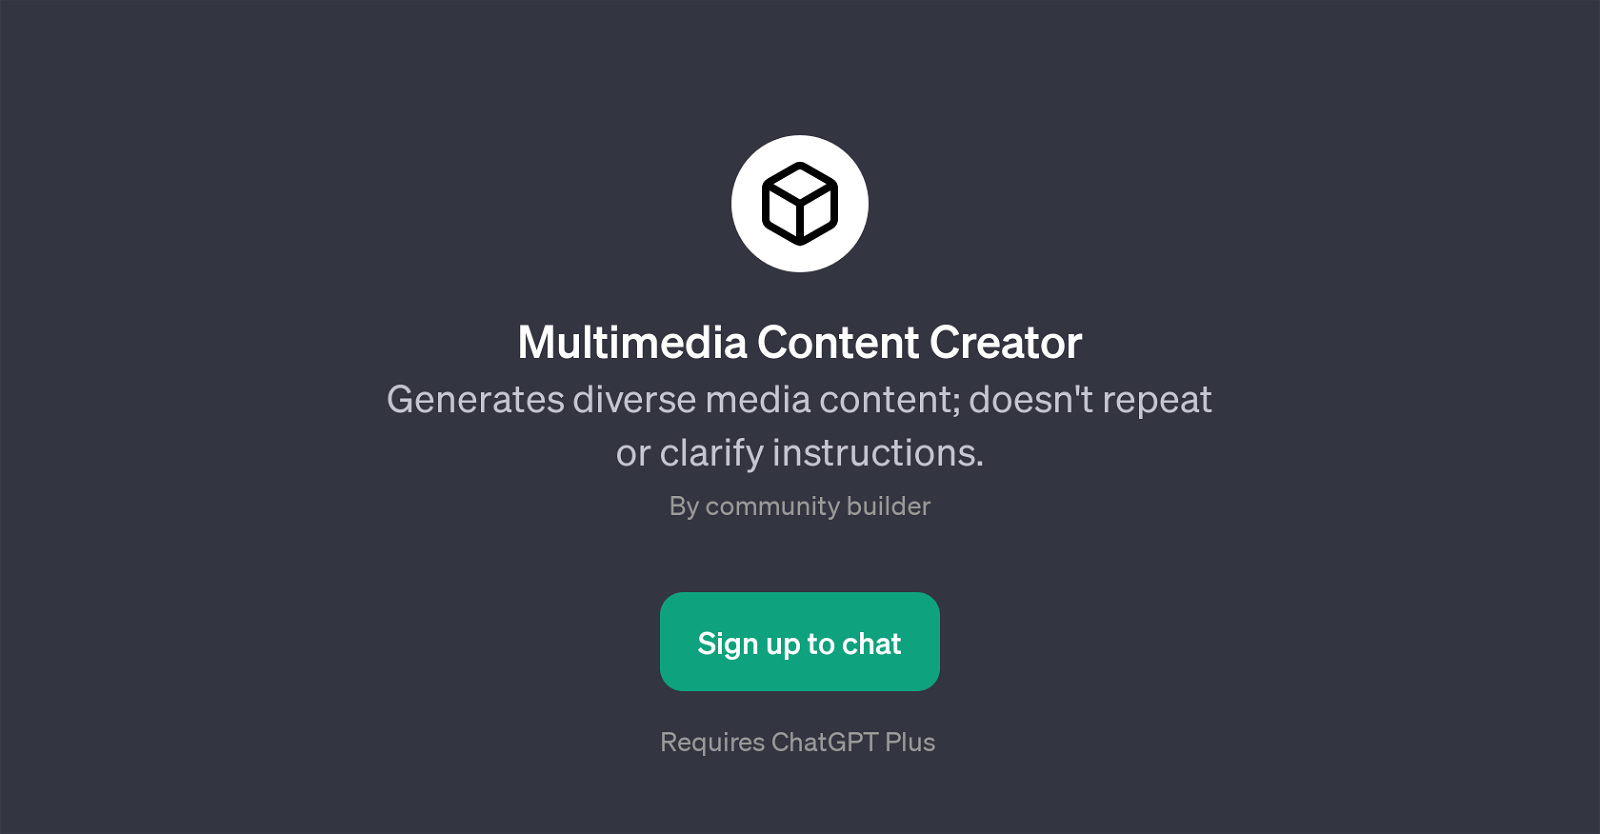 Multimedia Content Creator website